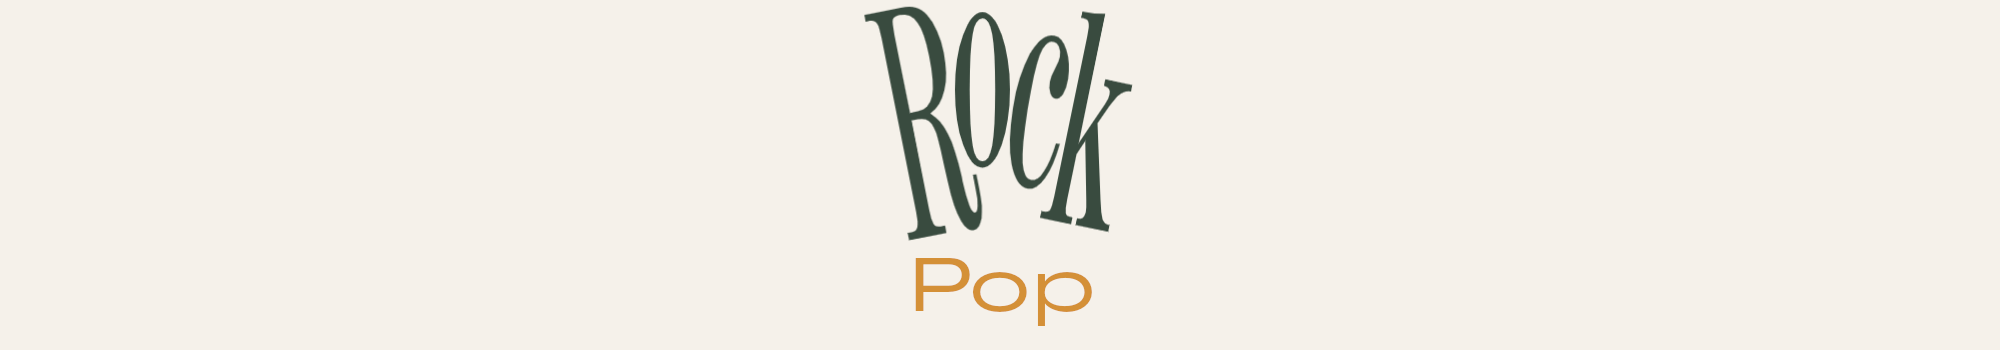 Rubrik till kategori: Rock - Pop